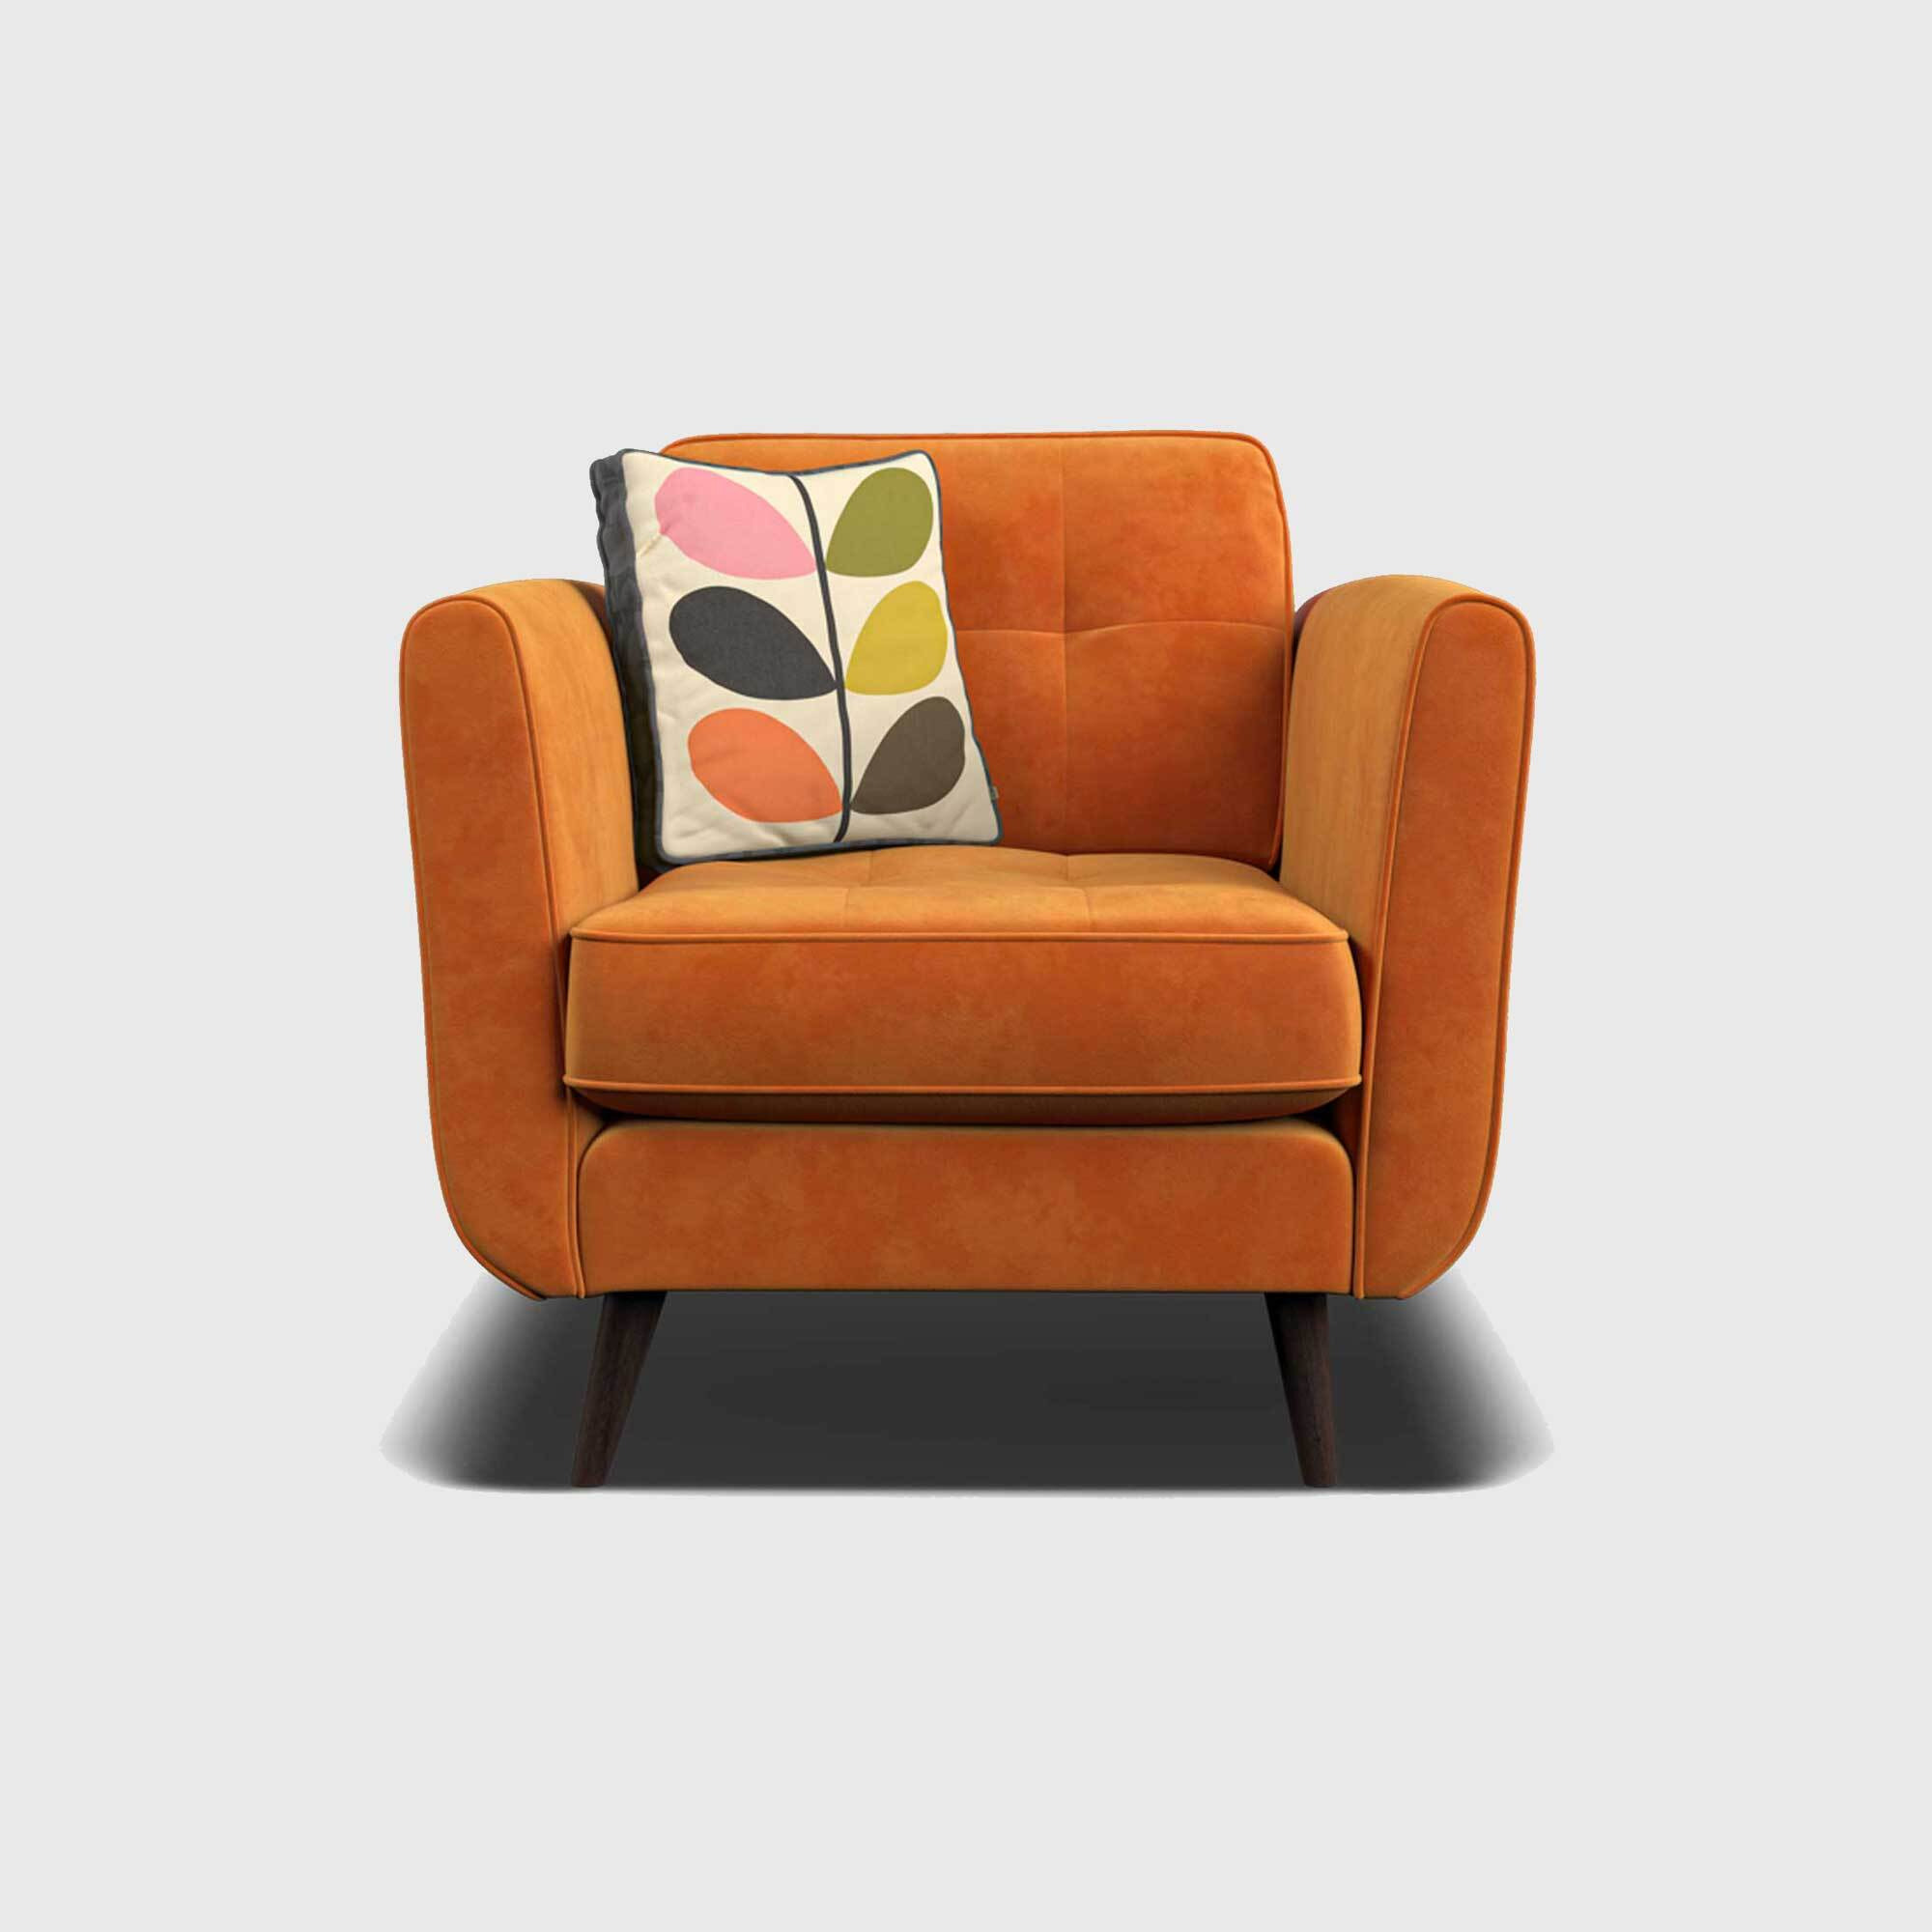 Orla Kiely Ivy Armchair, Orange Fabric - Barker & Stonehouse - image 1